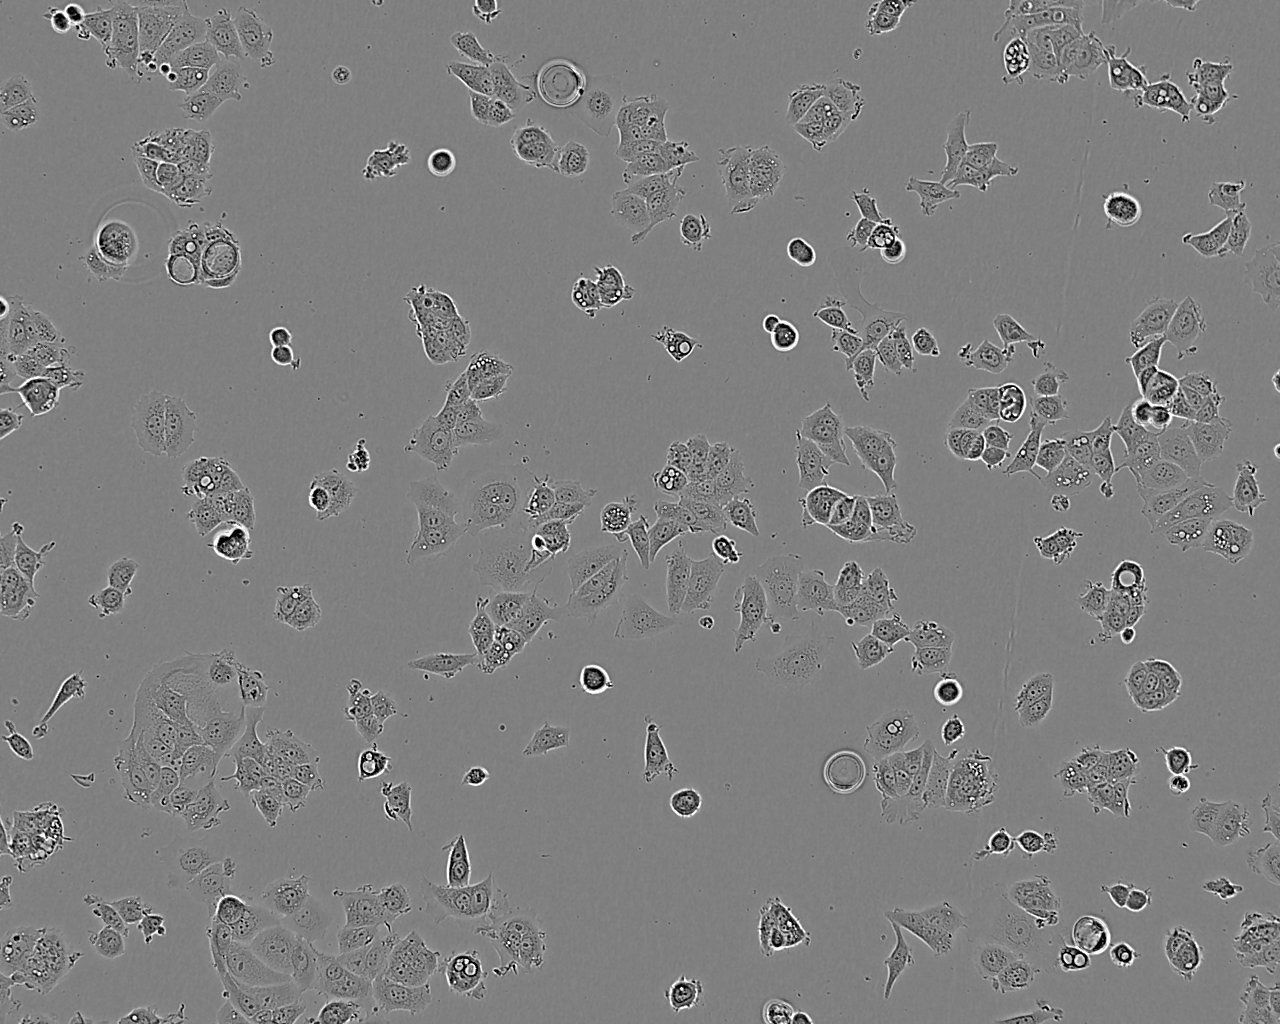 NCI-H2122 Cells|人肺癌细胞系